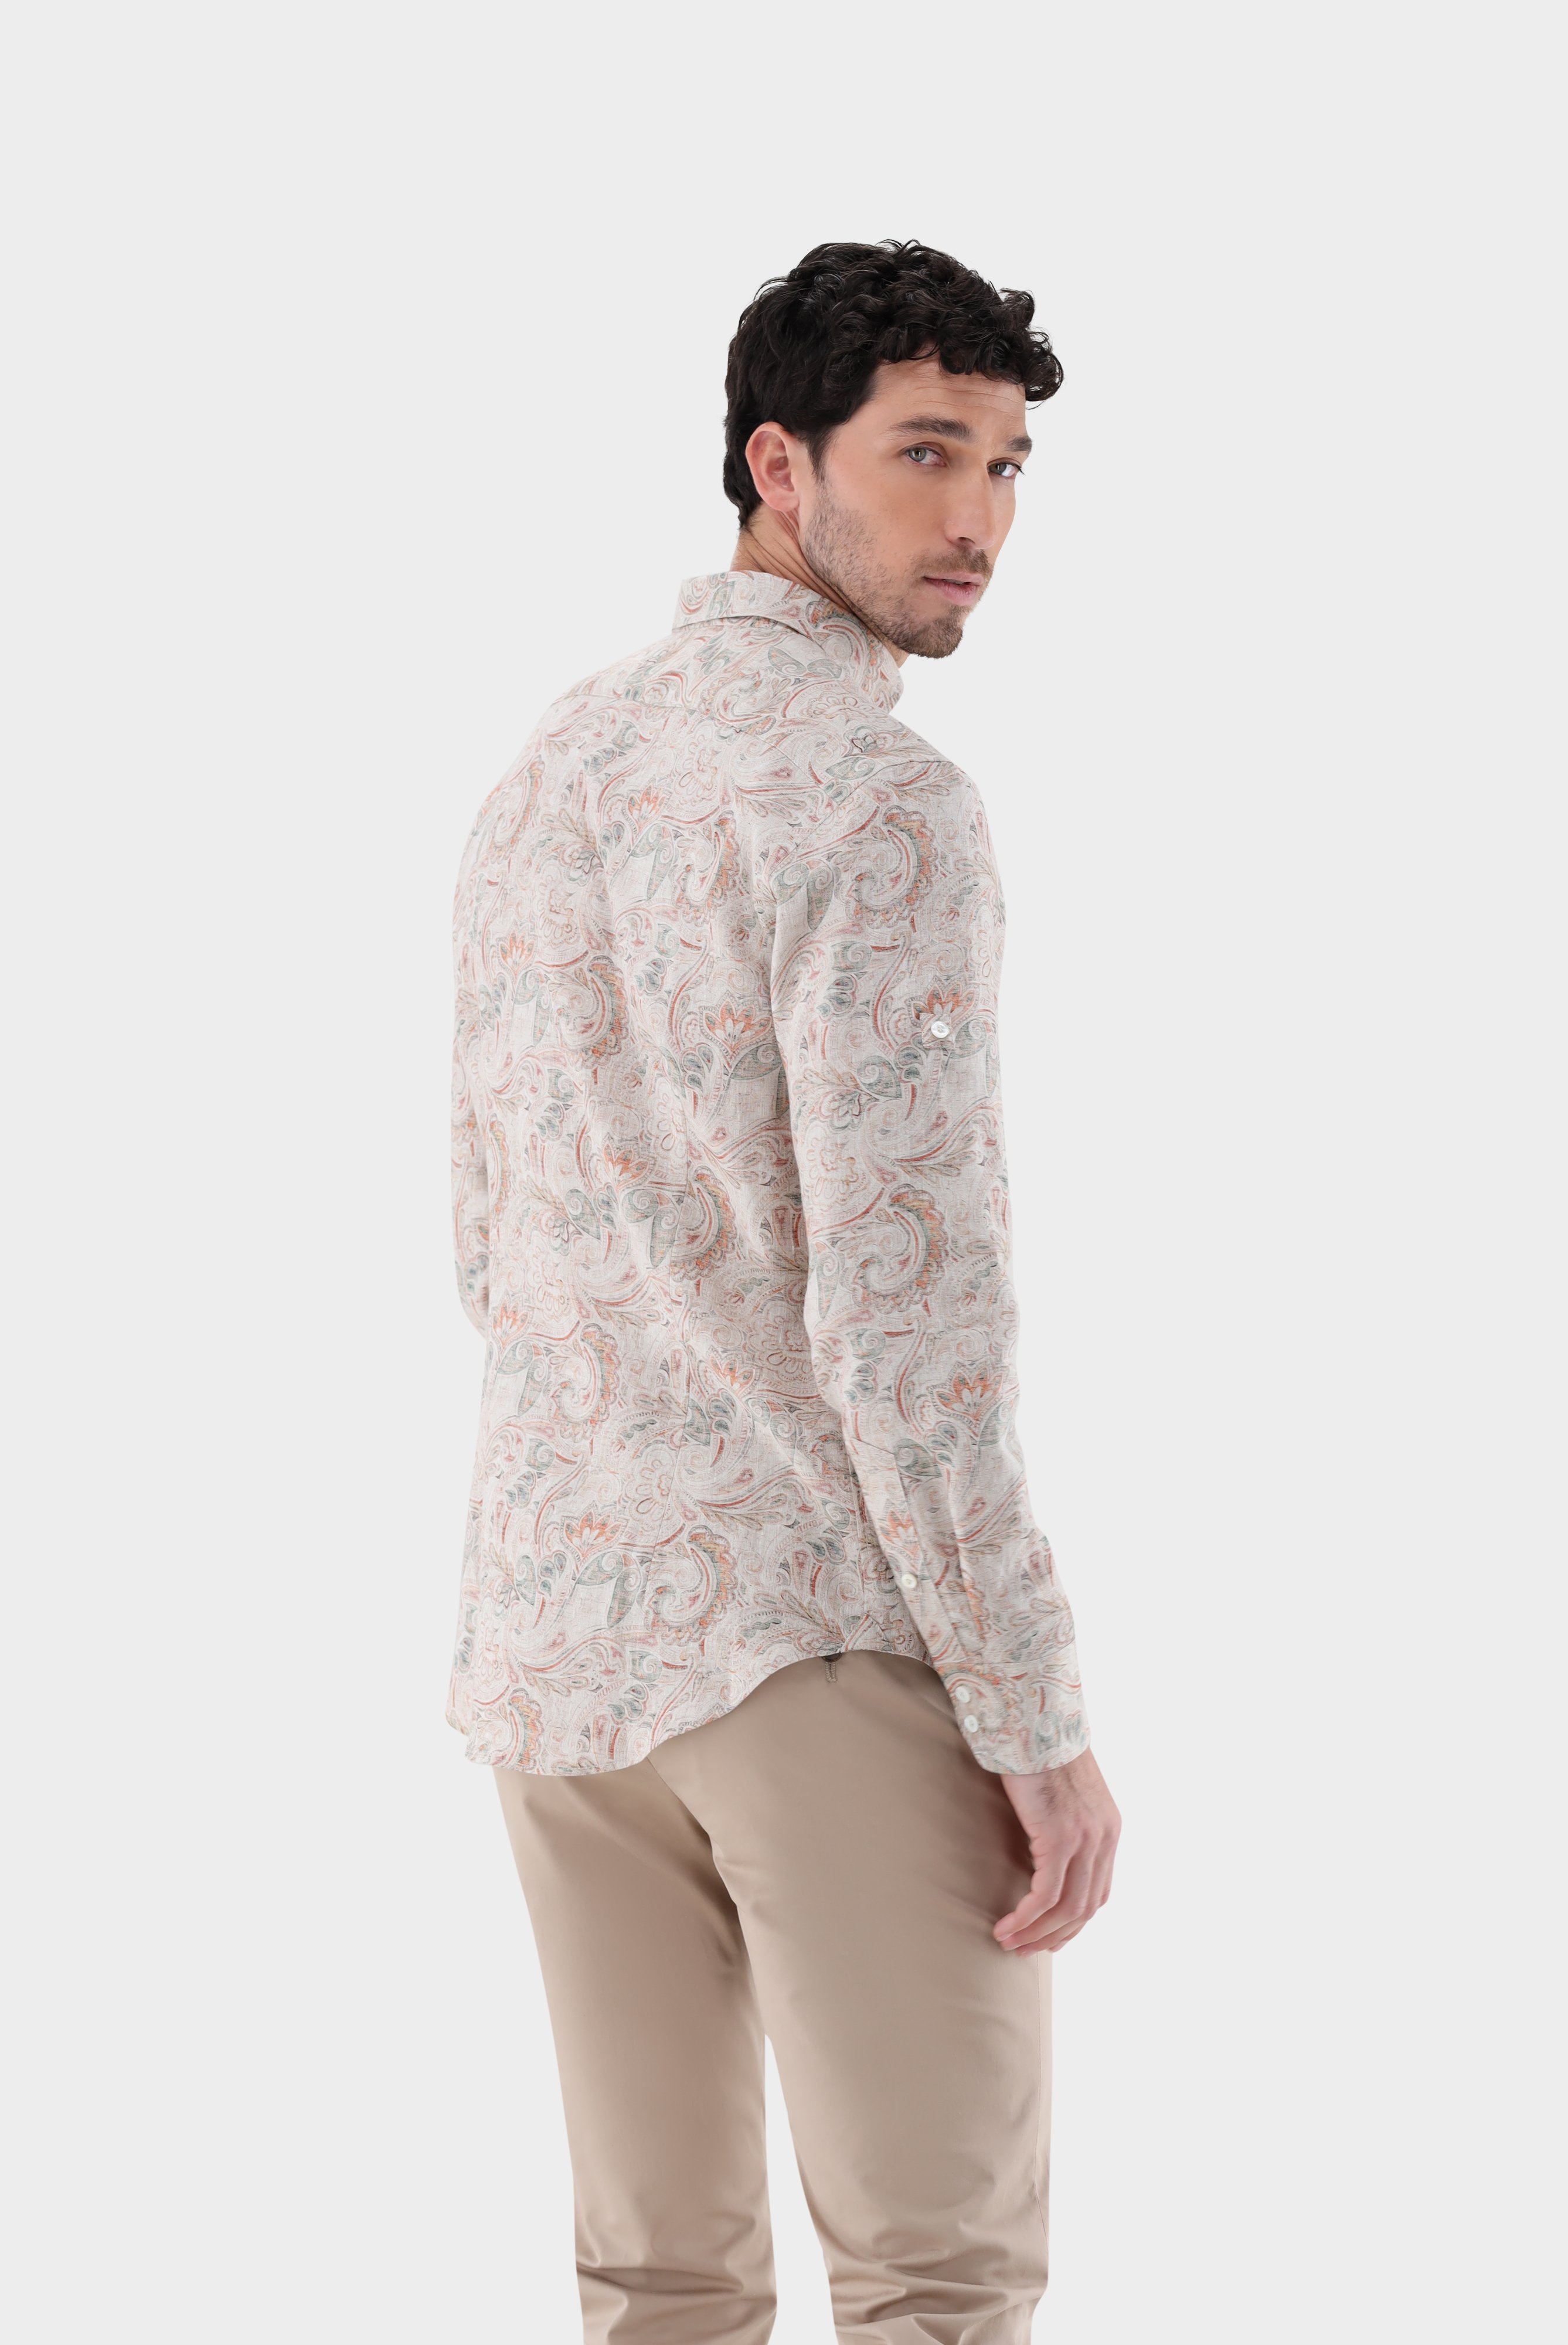 Casual Hemden+Leinenhemd mit Paisley-Druck Tailor Fit+20.2013.C4.172036.113.38